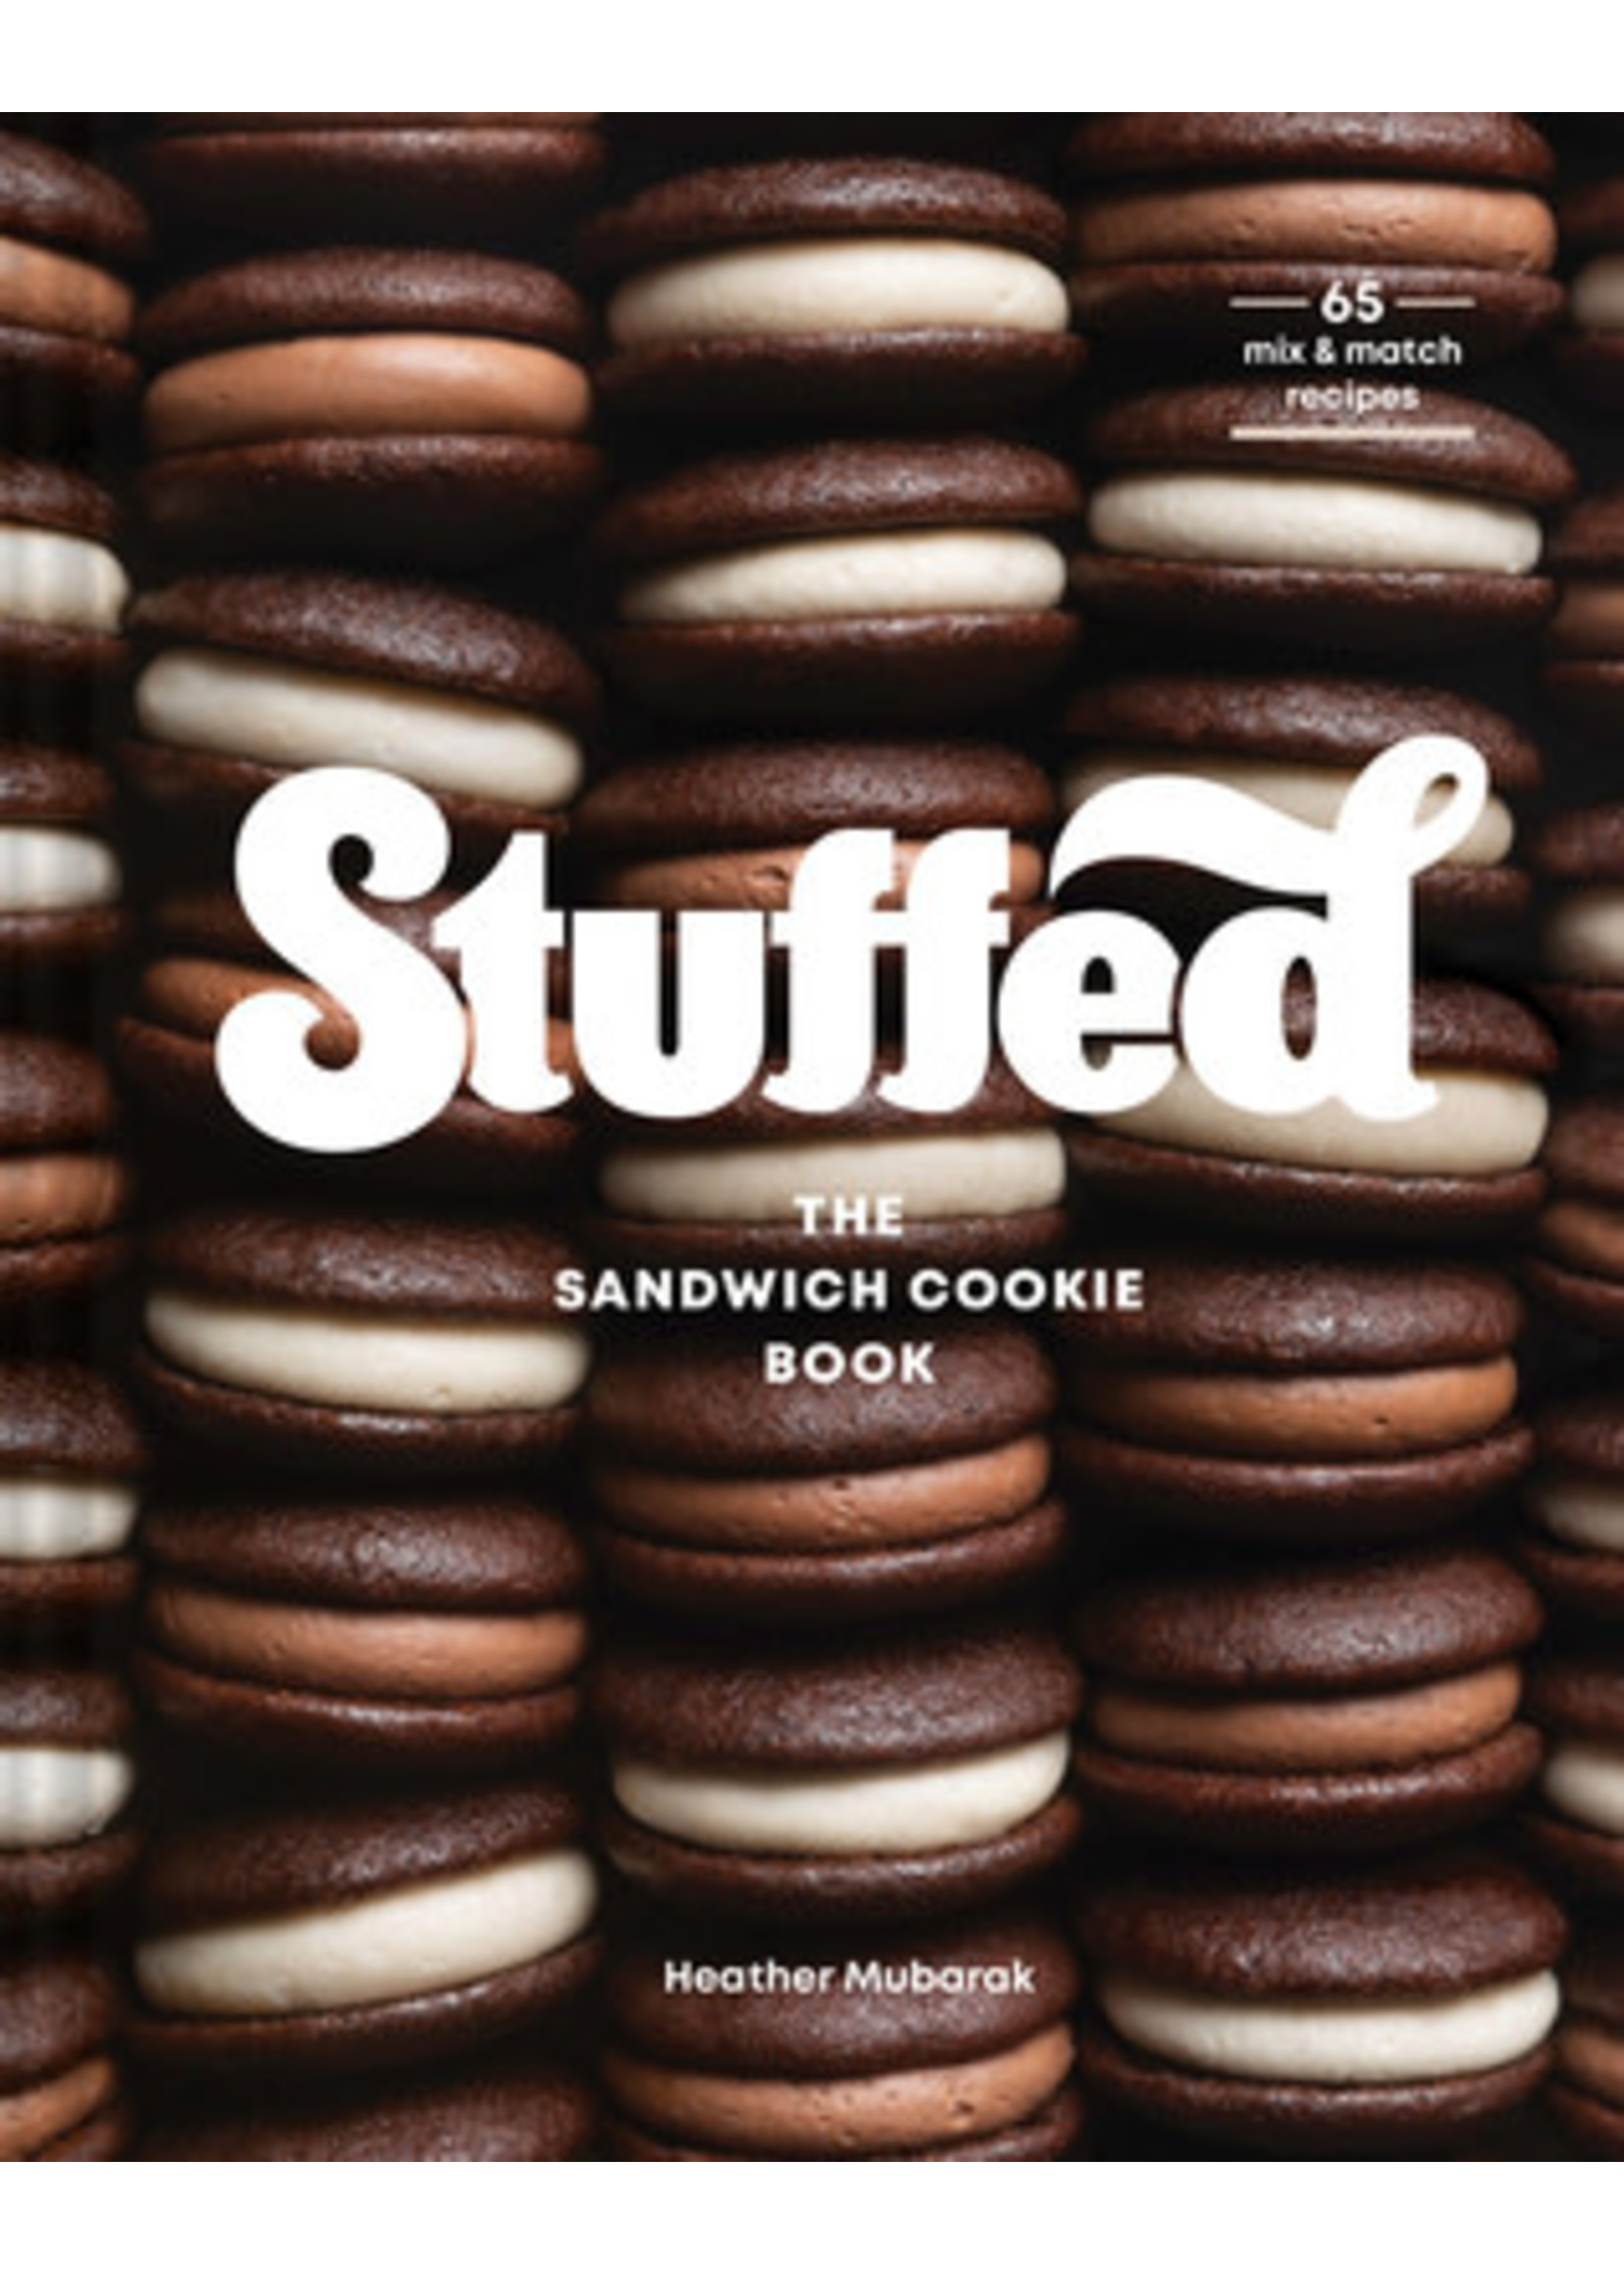 Stuffed: The Sandwich Cookie Book by Heather Mubarak